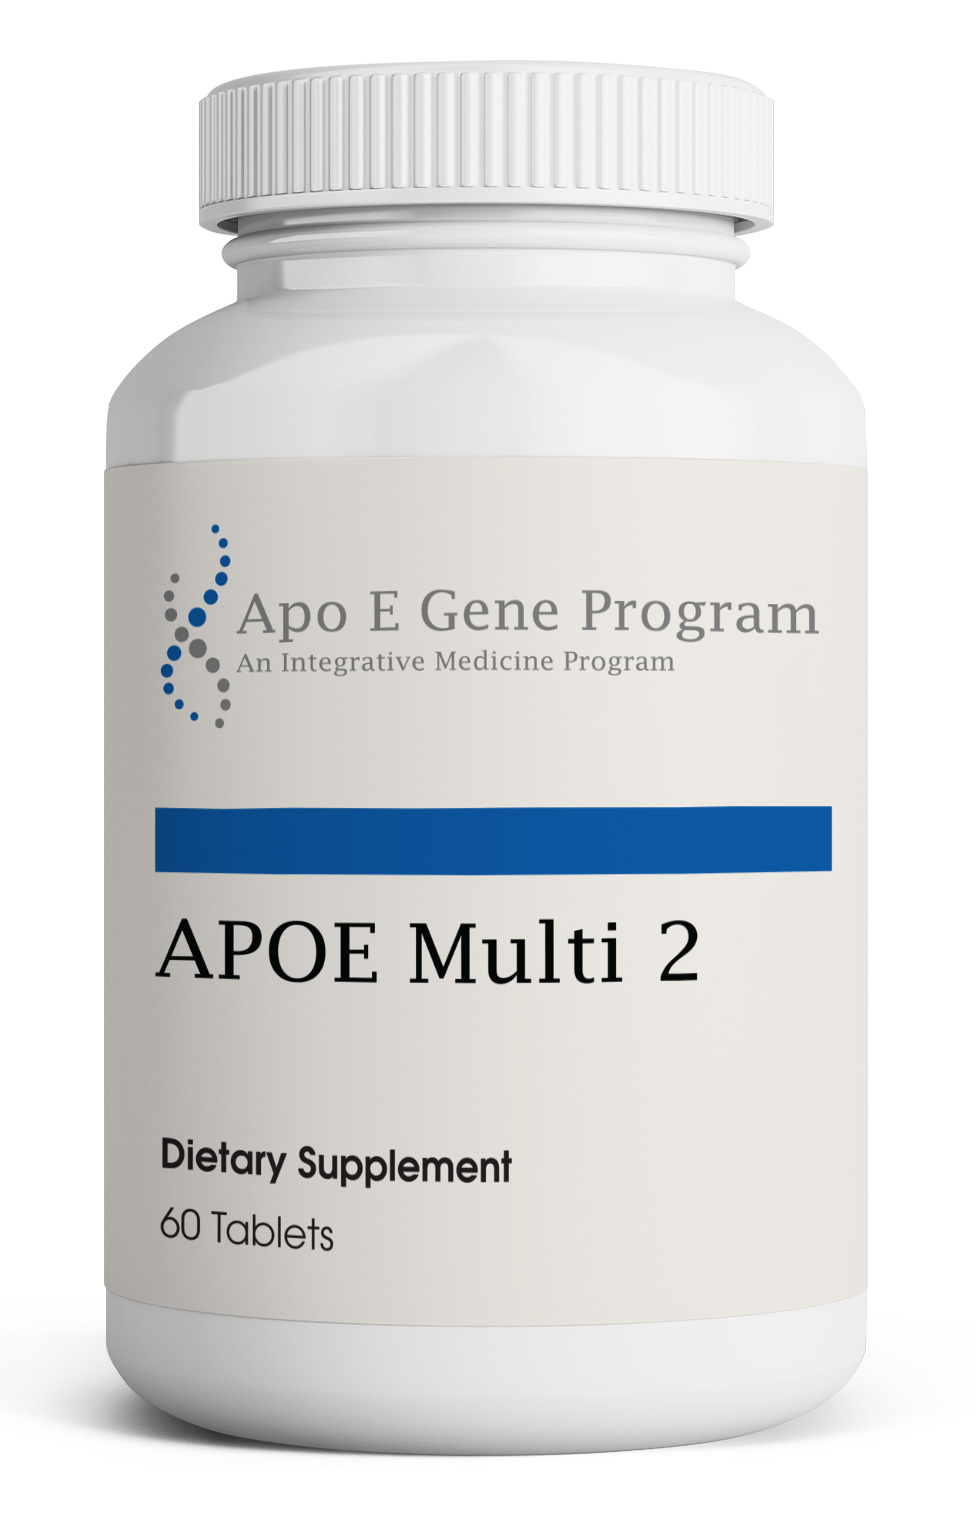 APO E Online Program Product